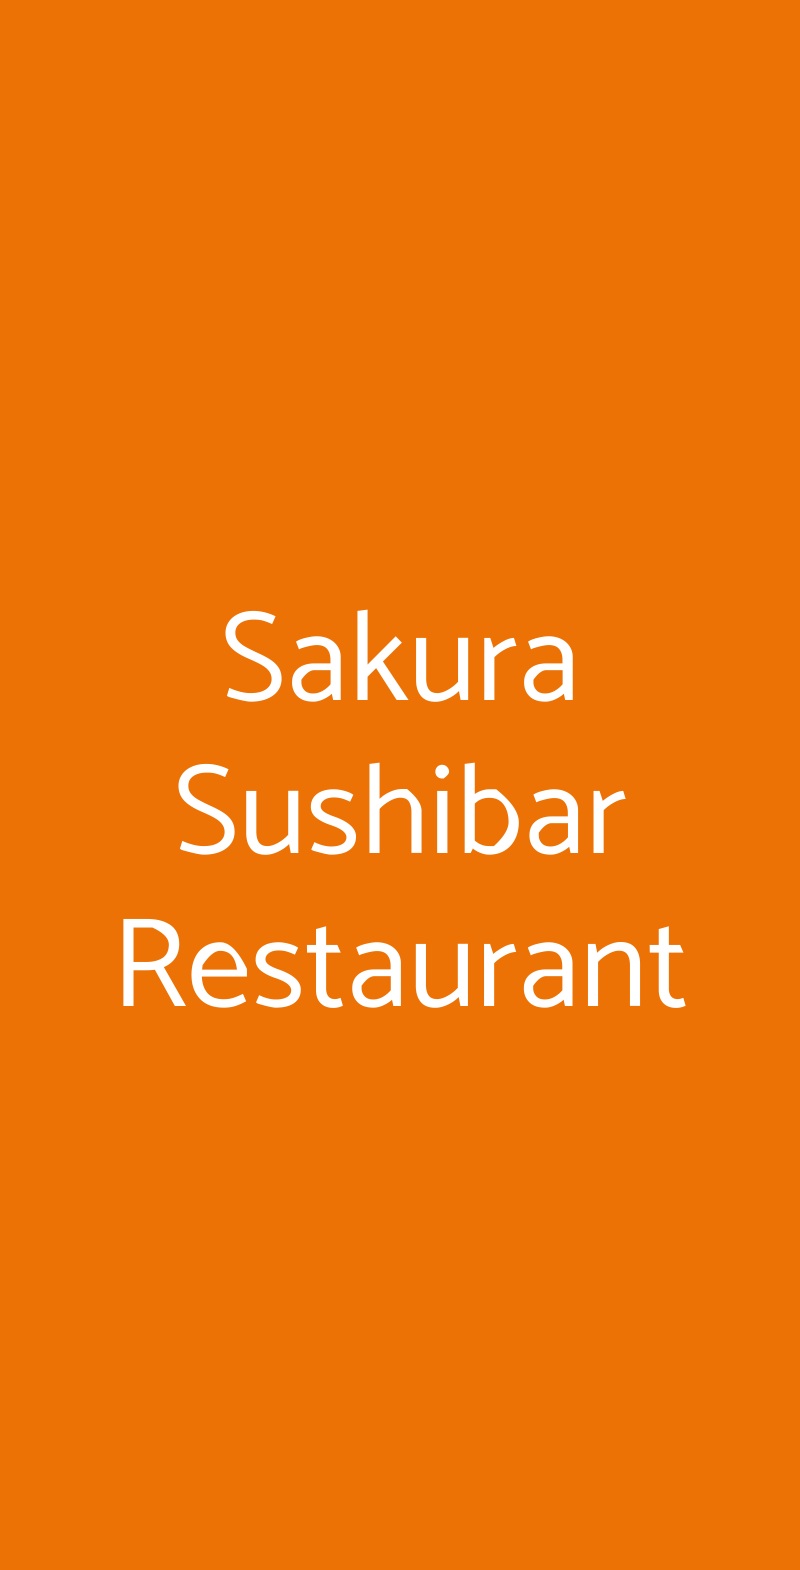 Sakura Sushibar Restaurant Catania menù 1 pagina